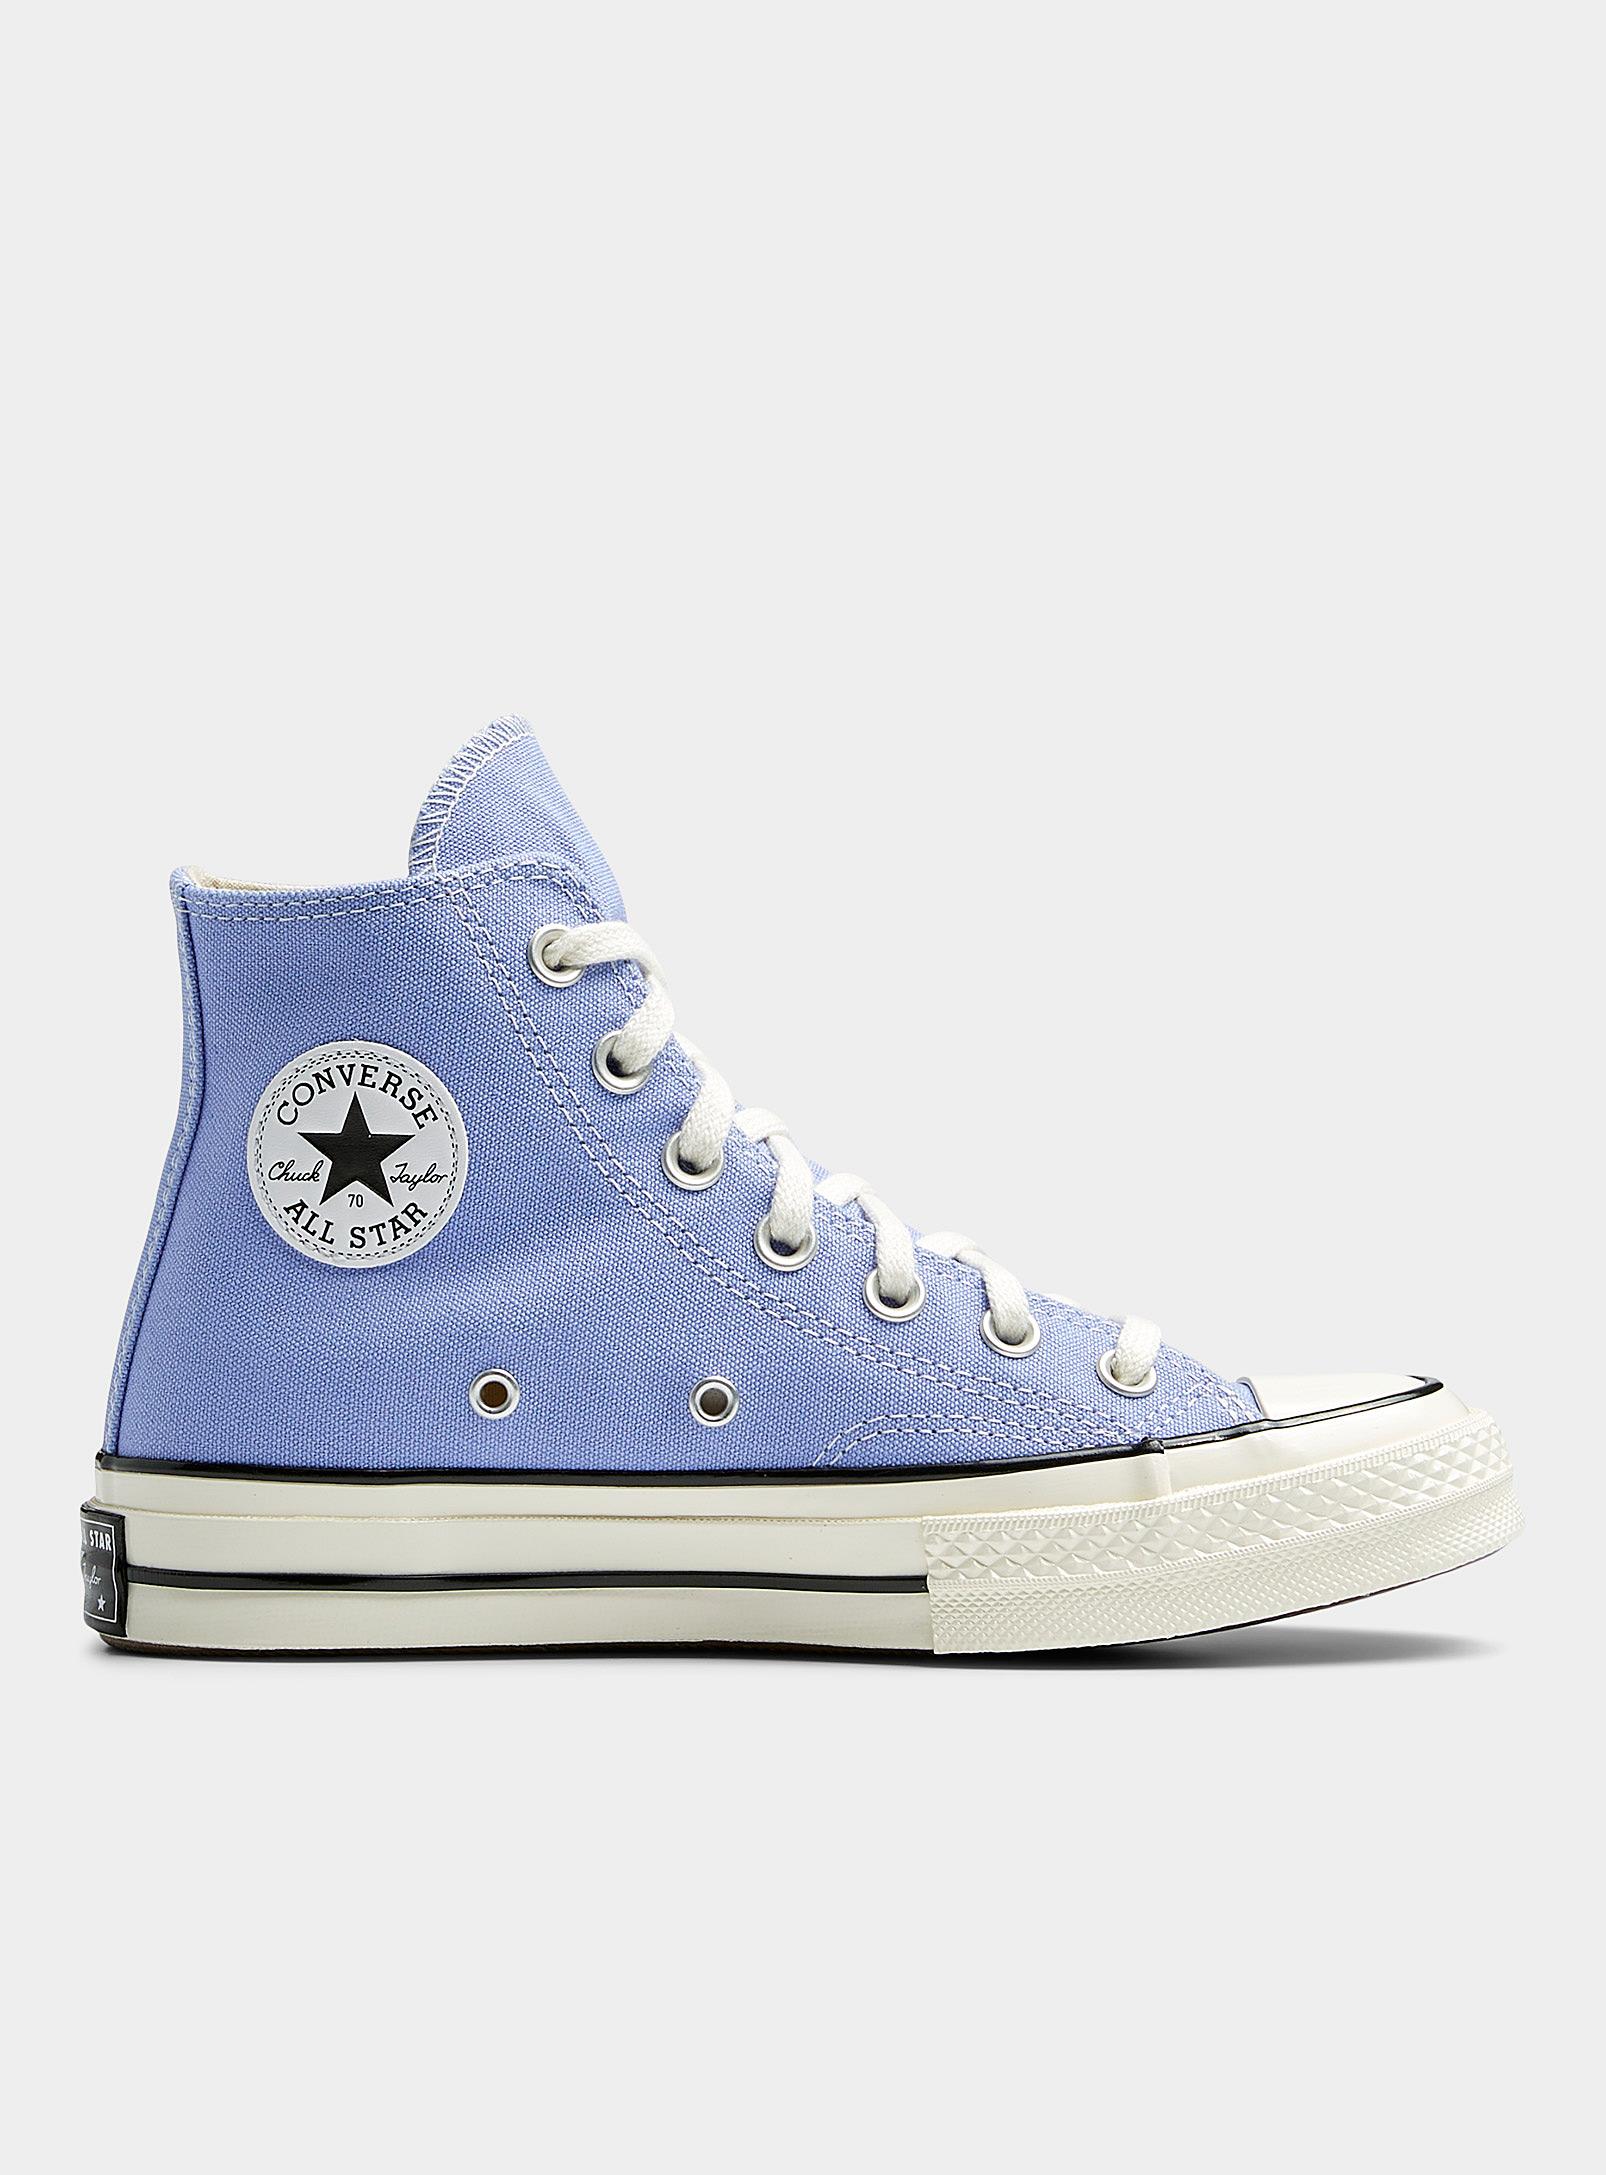 Converse Ultraviolet Chuck 70 High Top Sneakers Women in Blue | Lyst